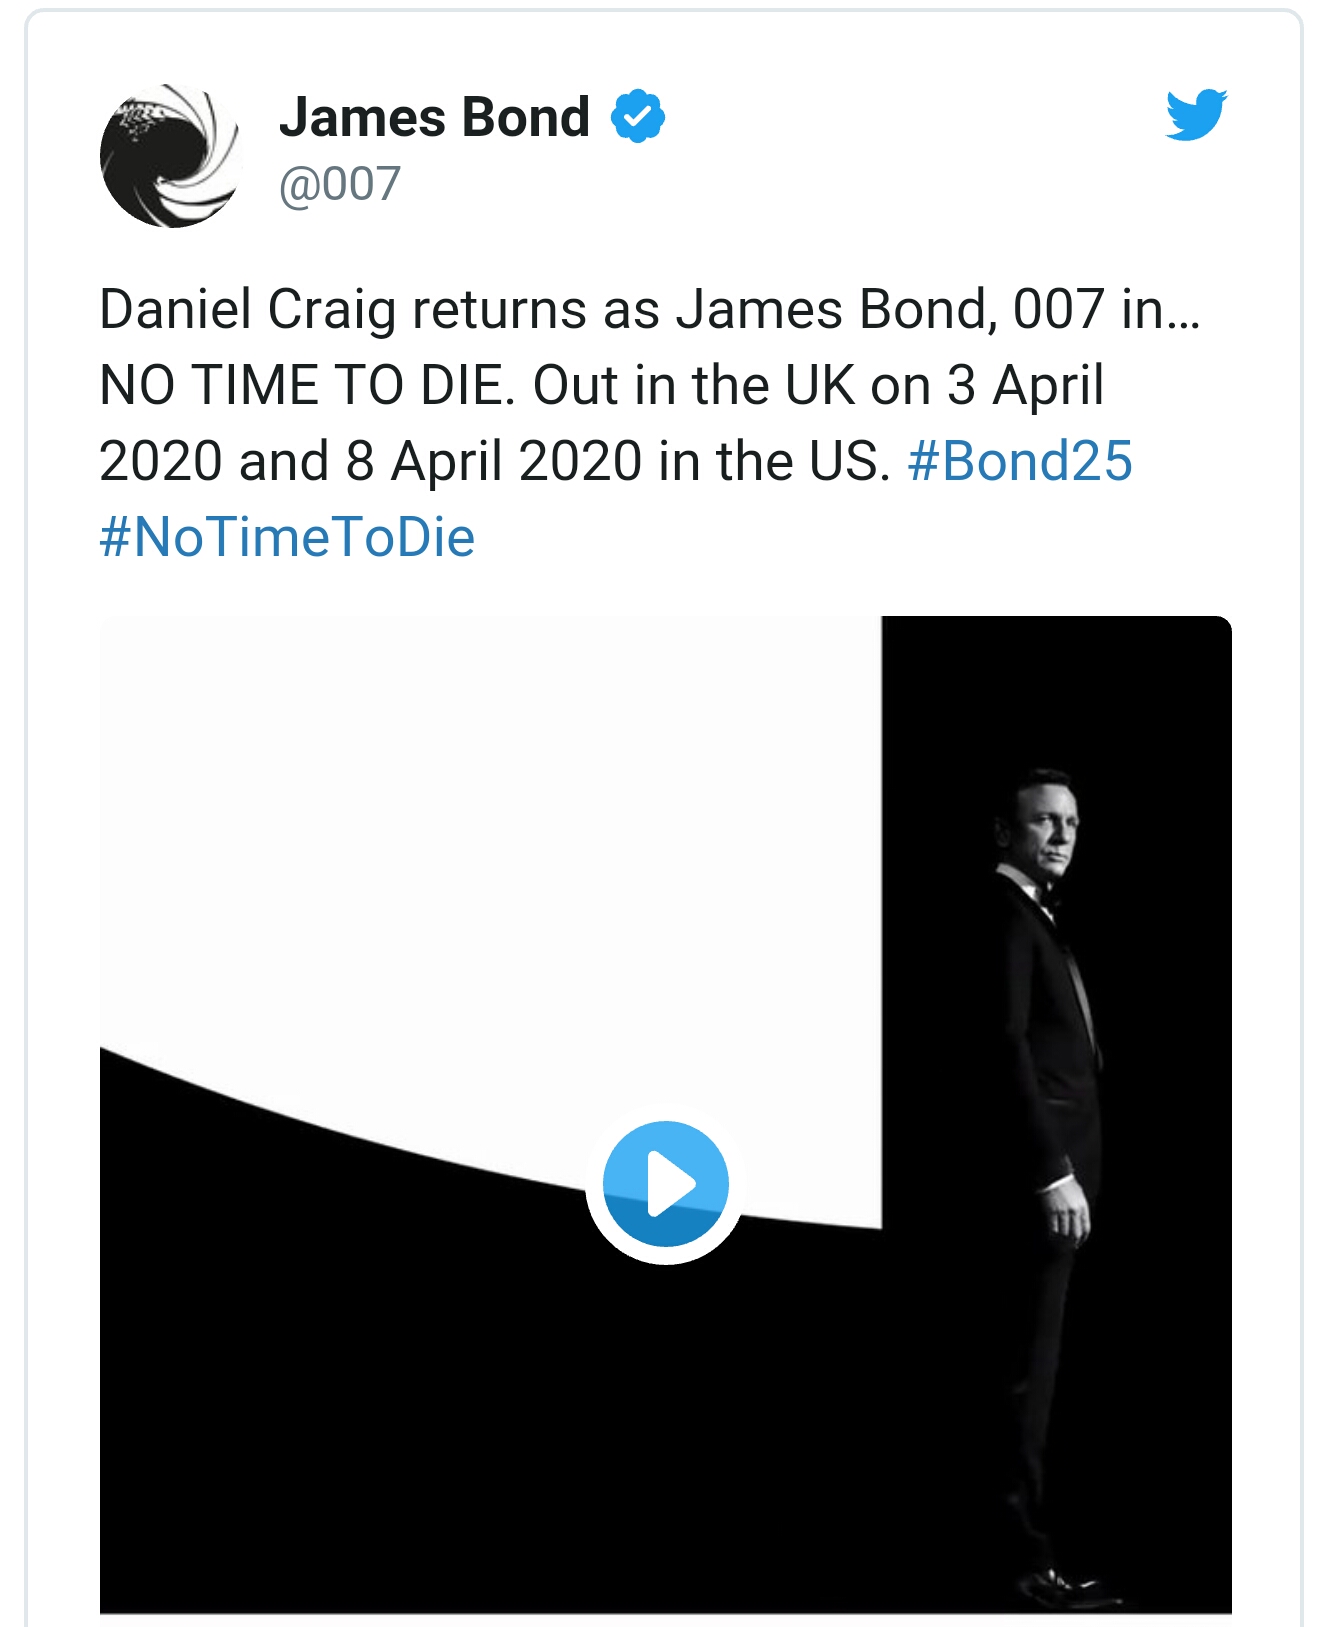  New James Bond Movie Title Revealed!